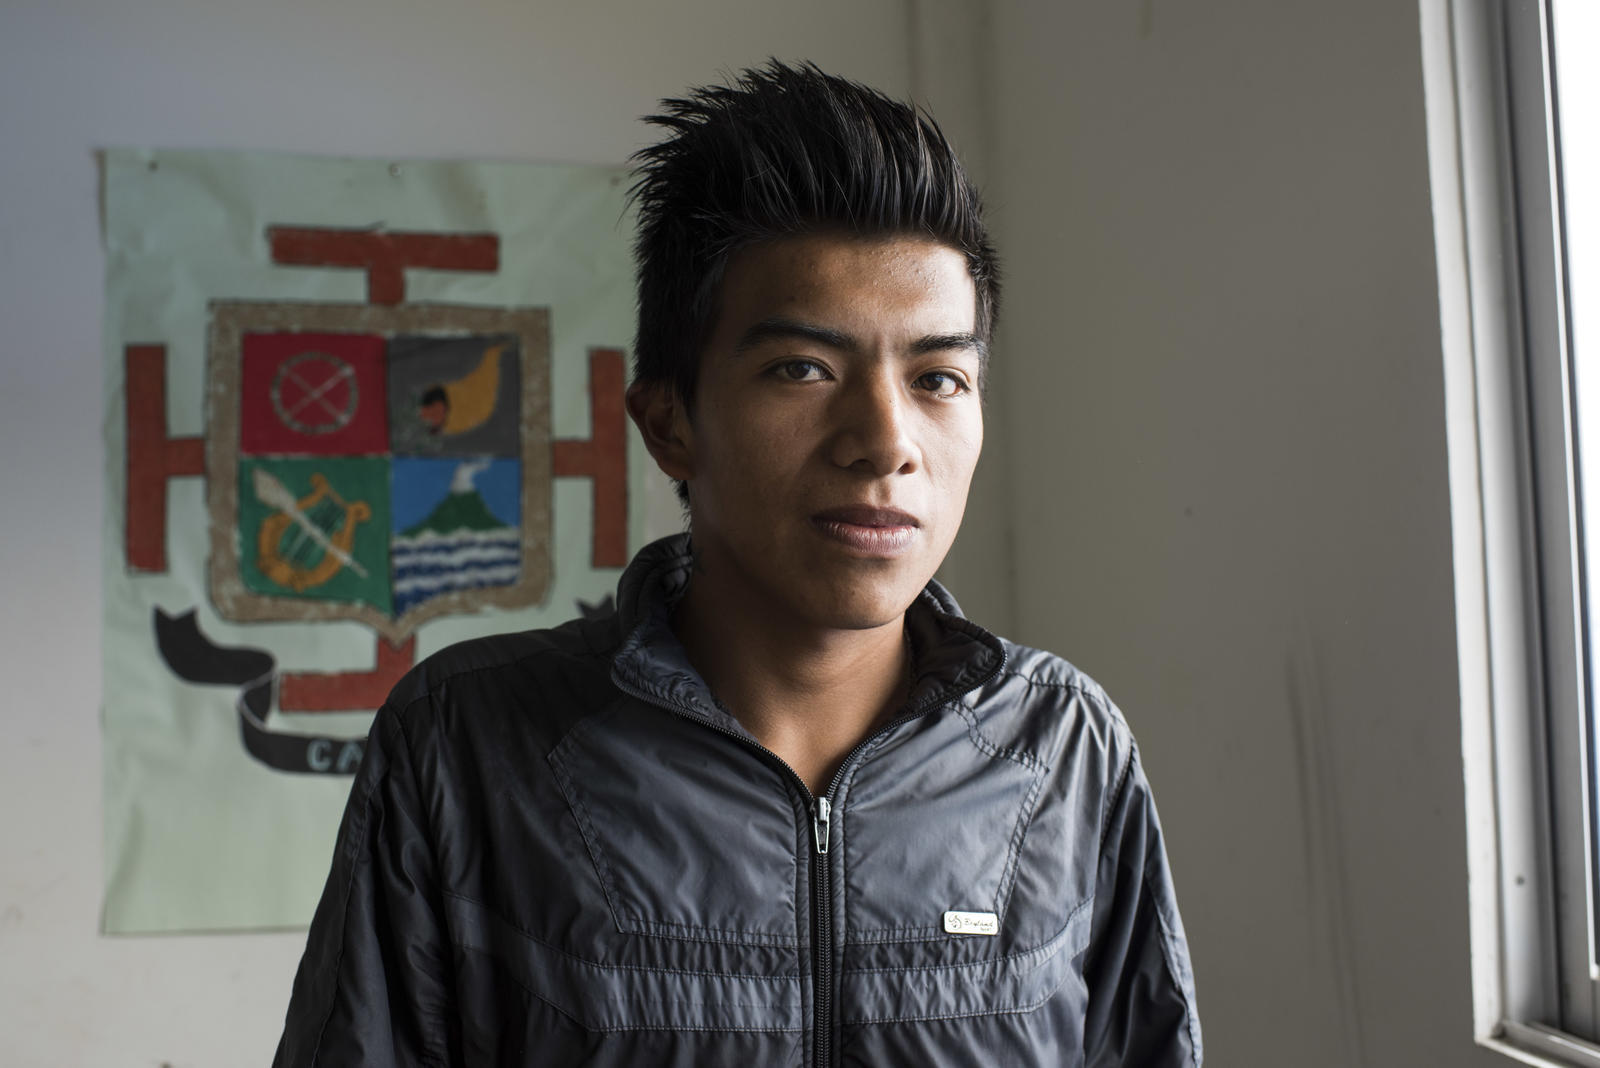 Yesid Alcibar Cordoba, 18 years old and 11th grade student. ©SDG Fund / Freya Morales